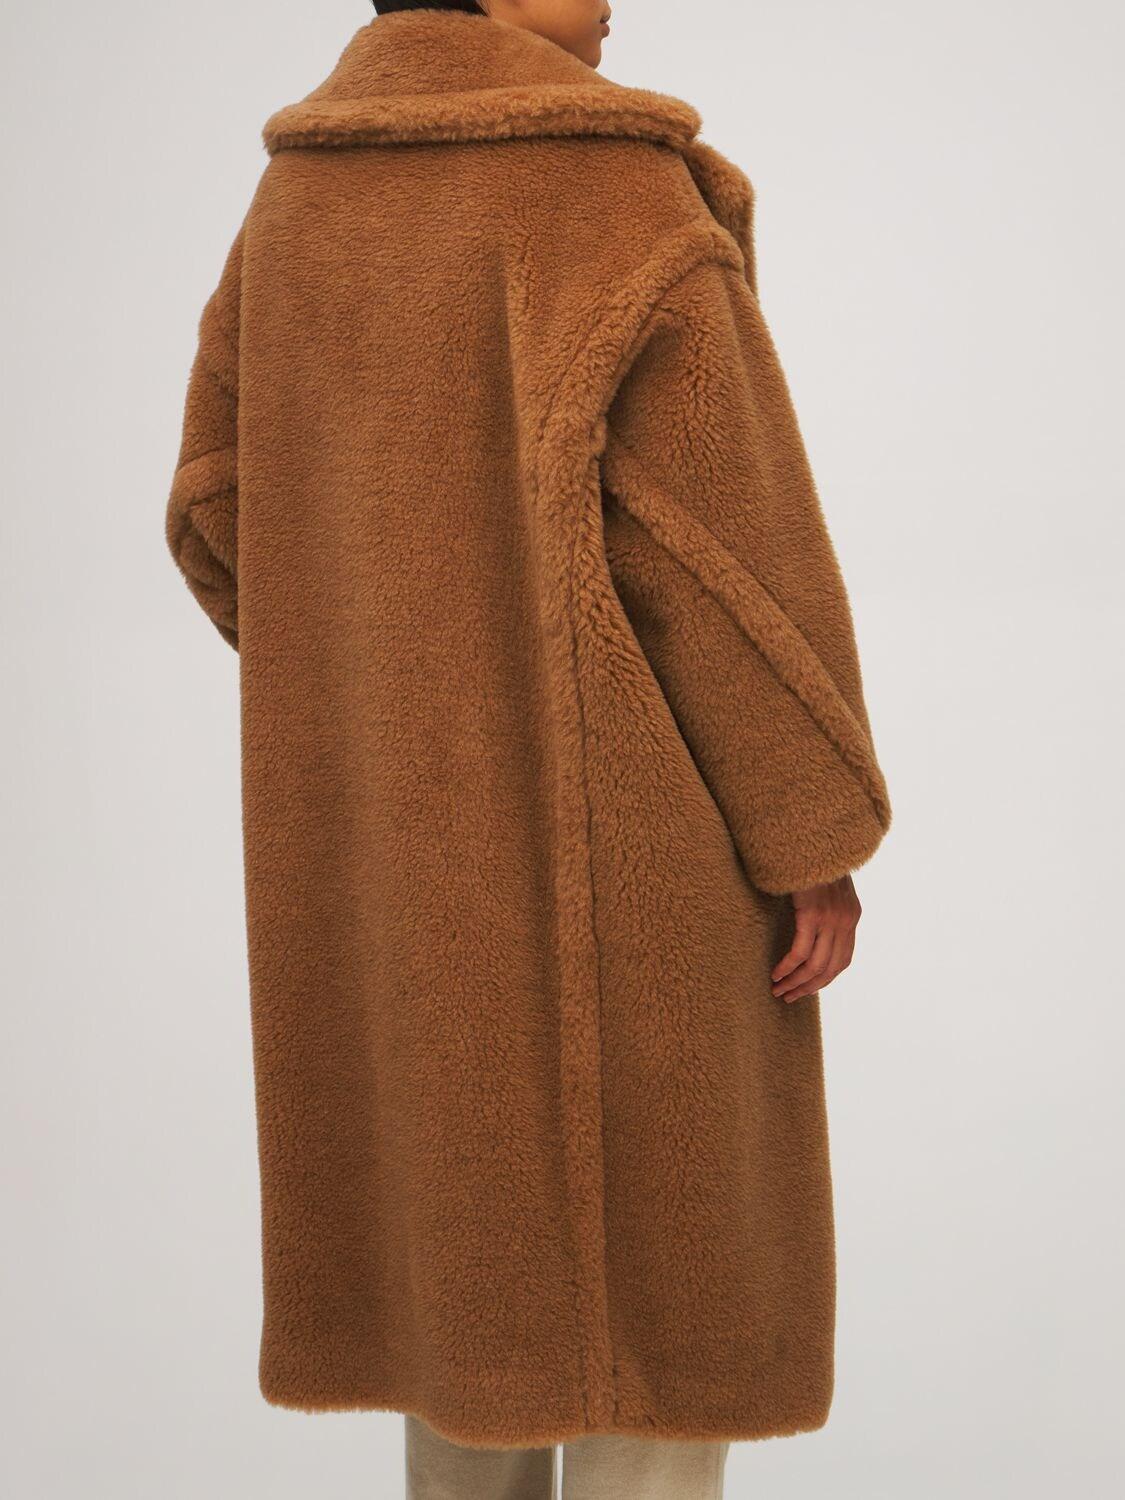 Max Mara Silk Teddy Bear Icon Coat in Camel (Natural) - Save 64% | Lyst